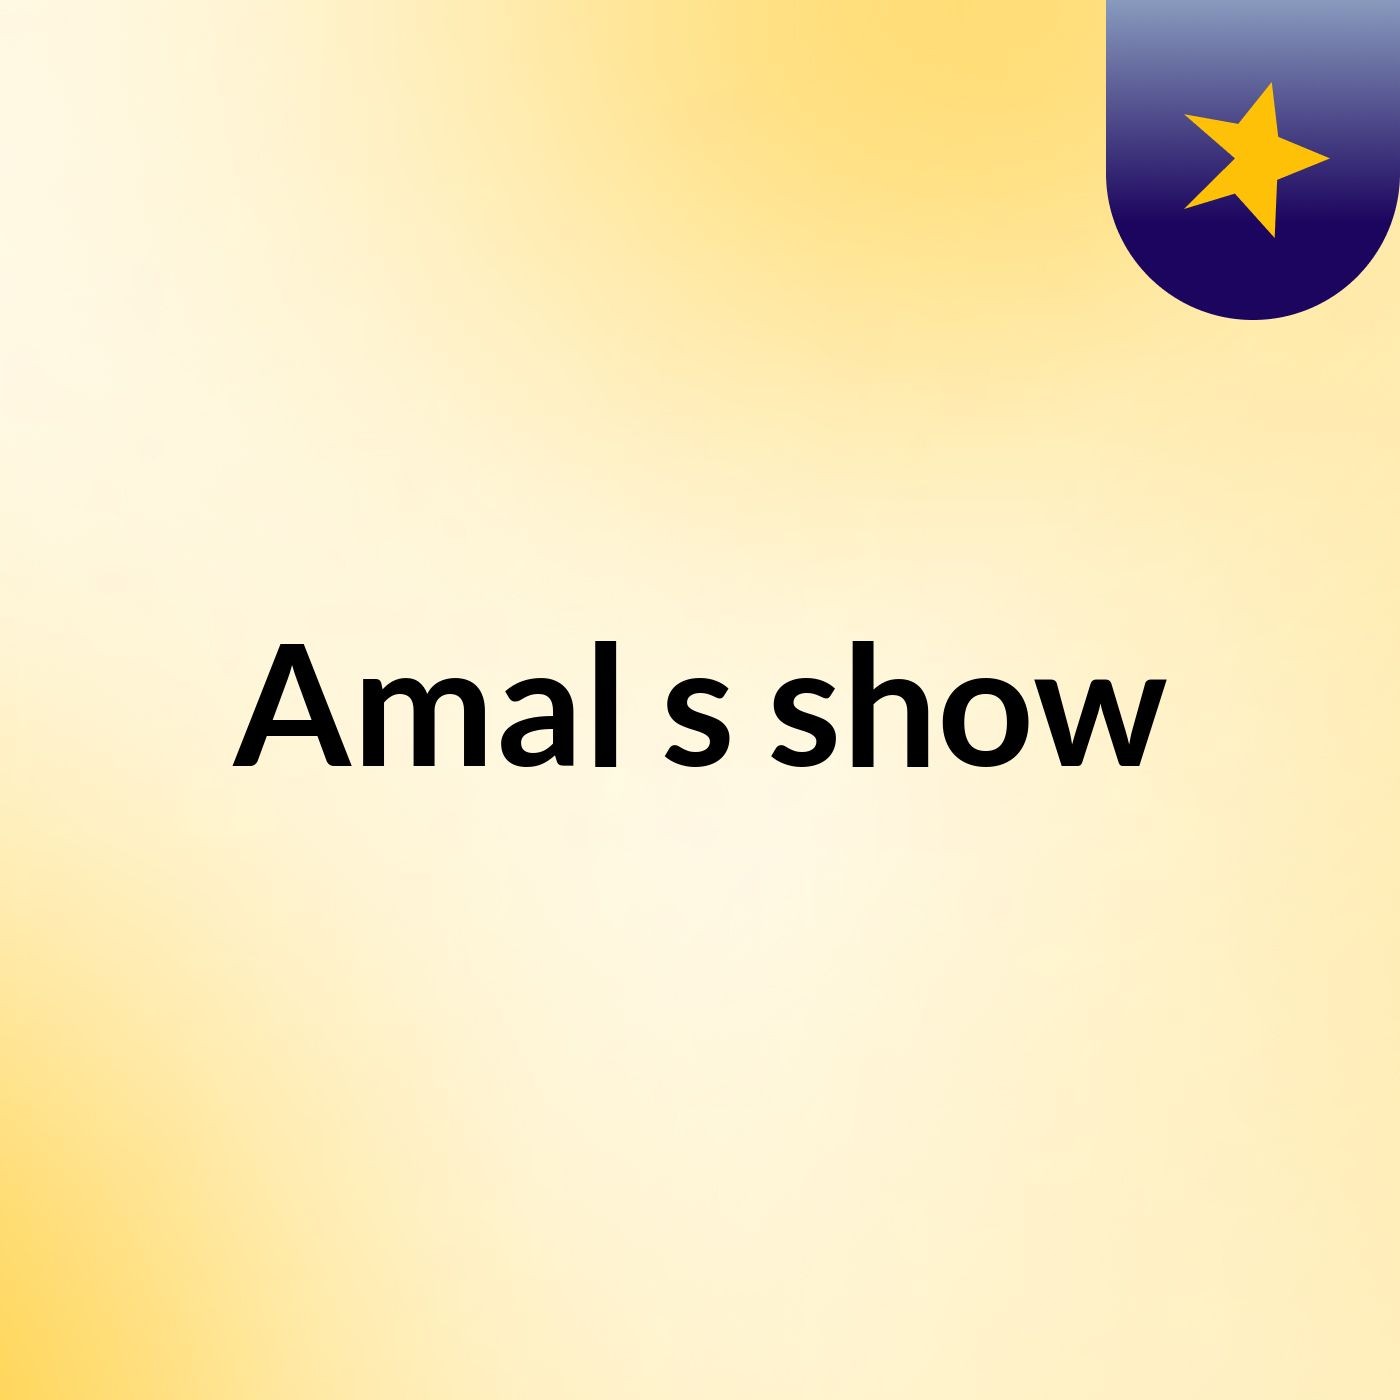 Amal's show